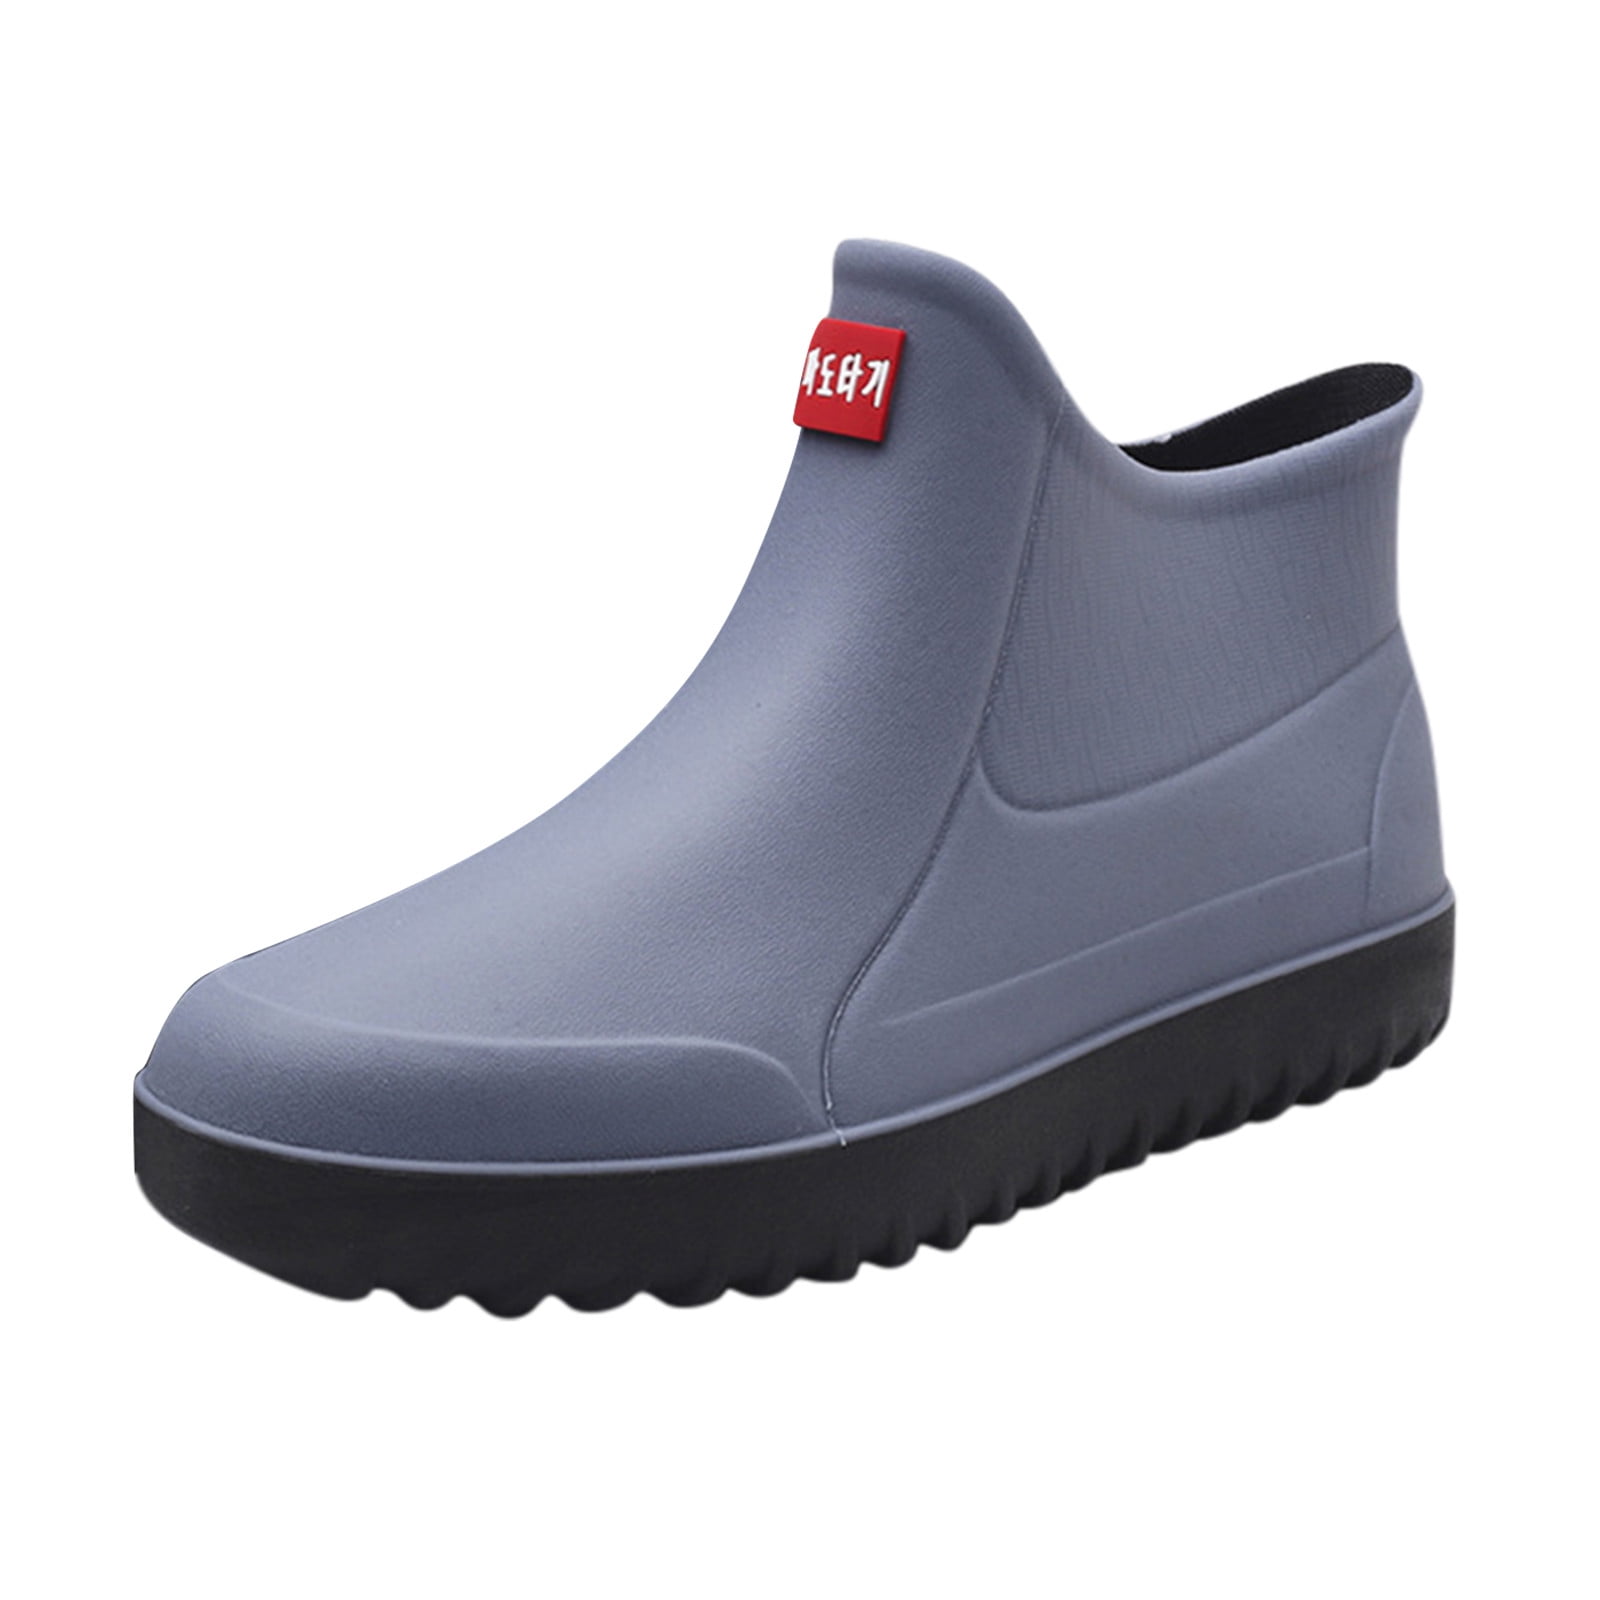 Hsttgsr Rain Boots for Women and Men, Waterproof